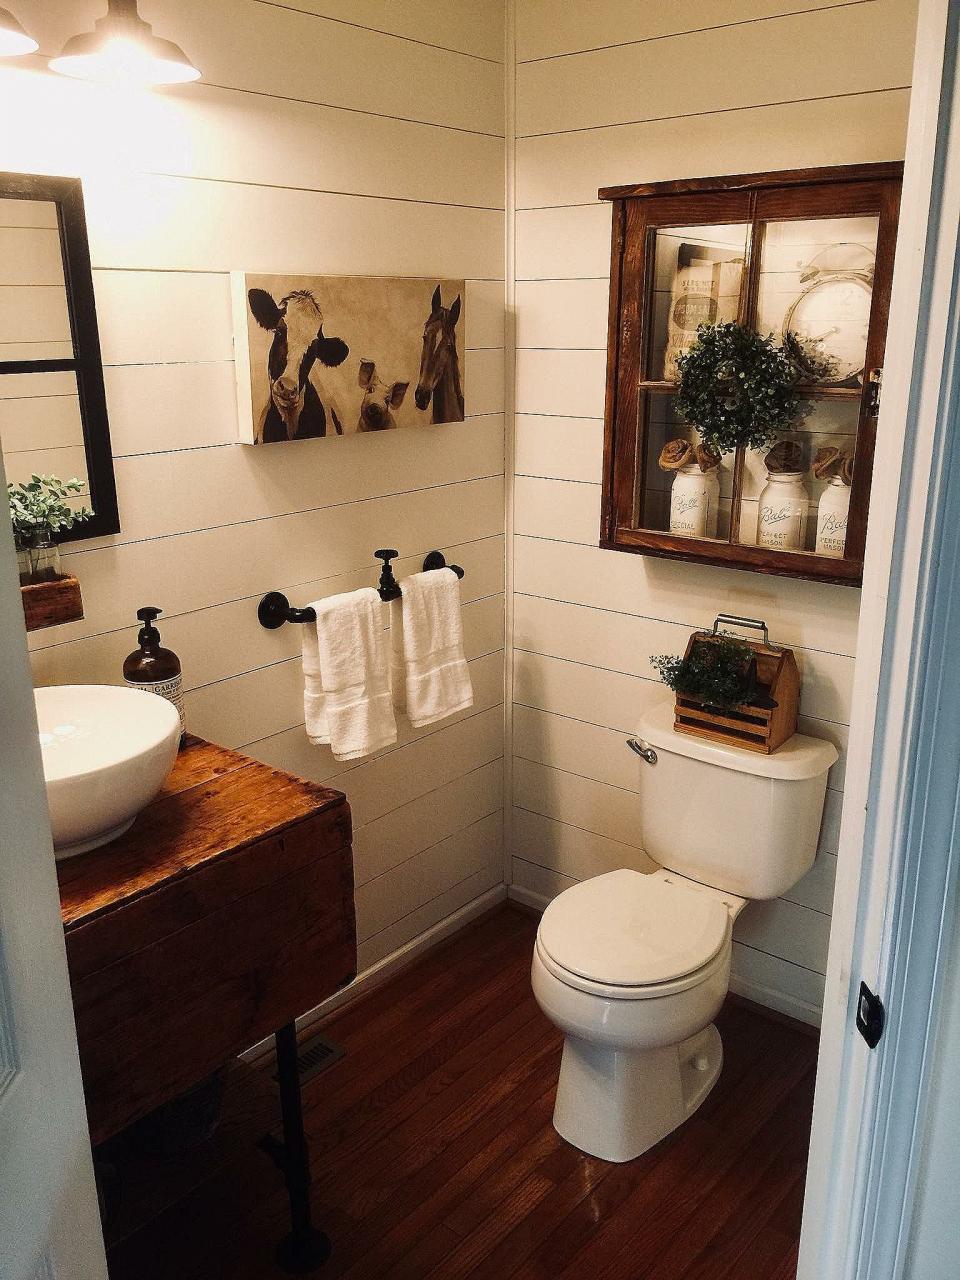 Awesome Bathroom Designs Pinterest Small rustic bathrooms, Bathroom